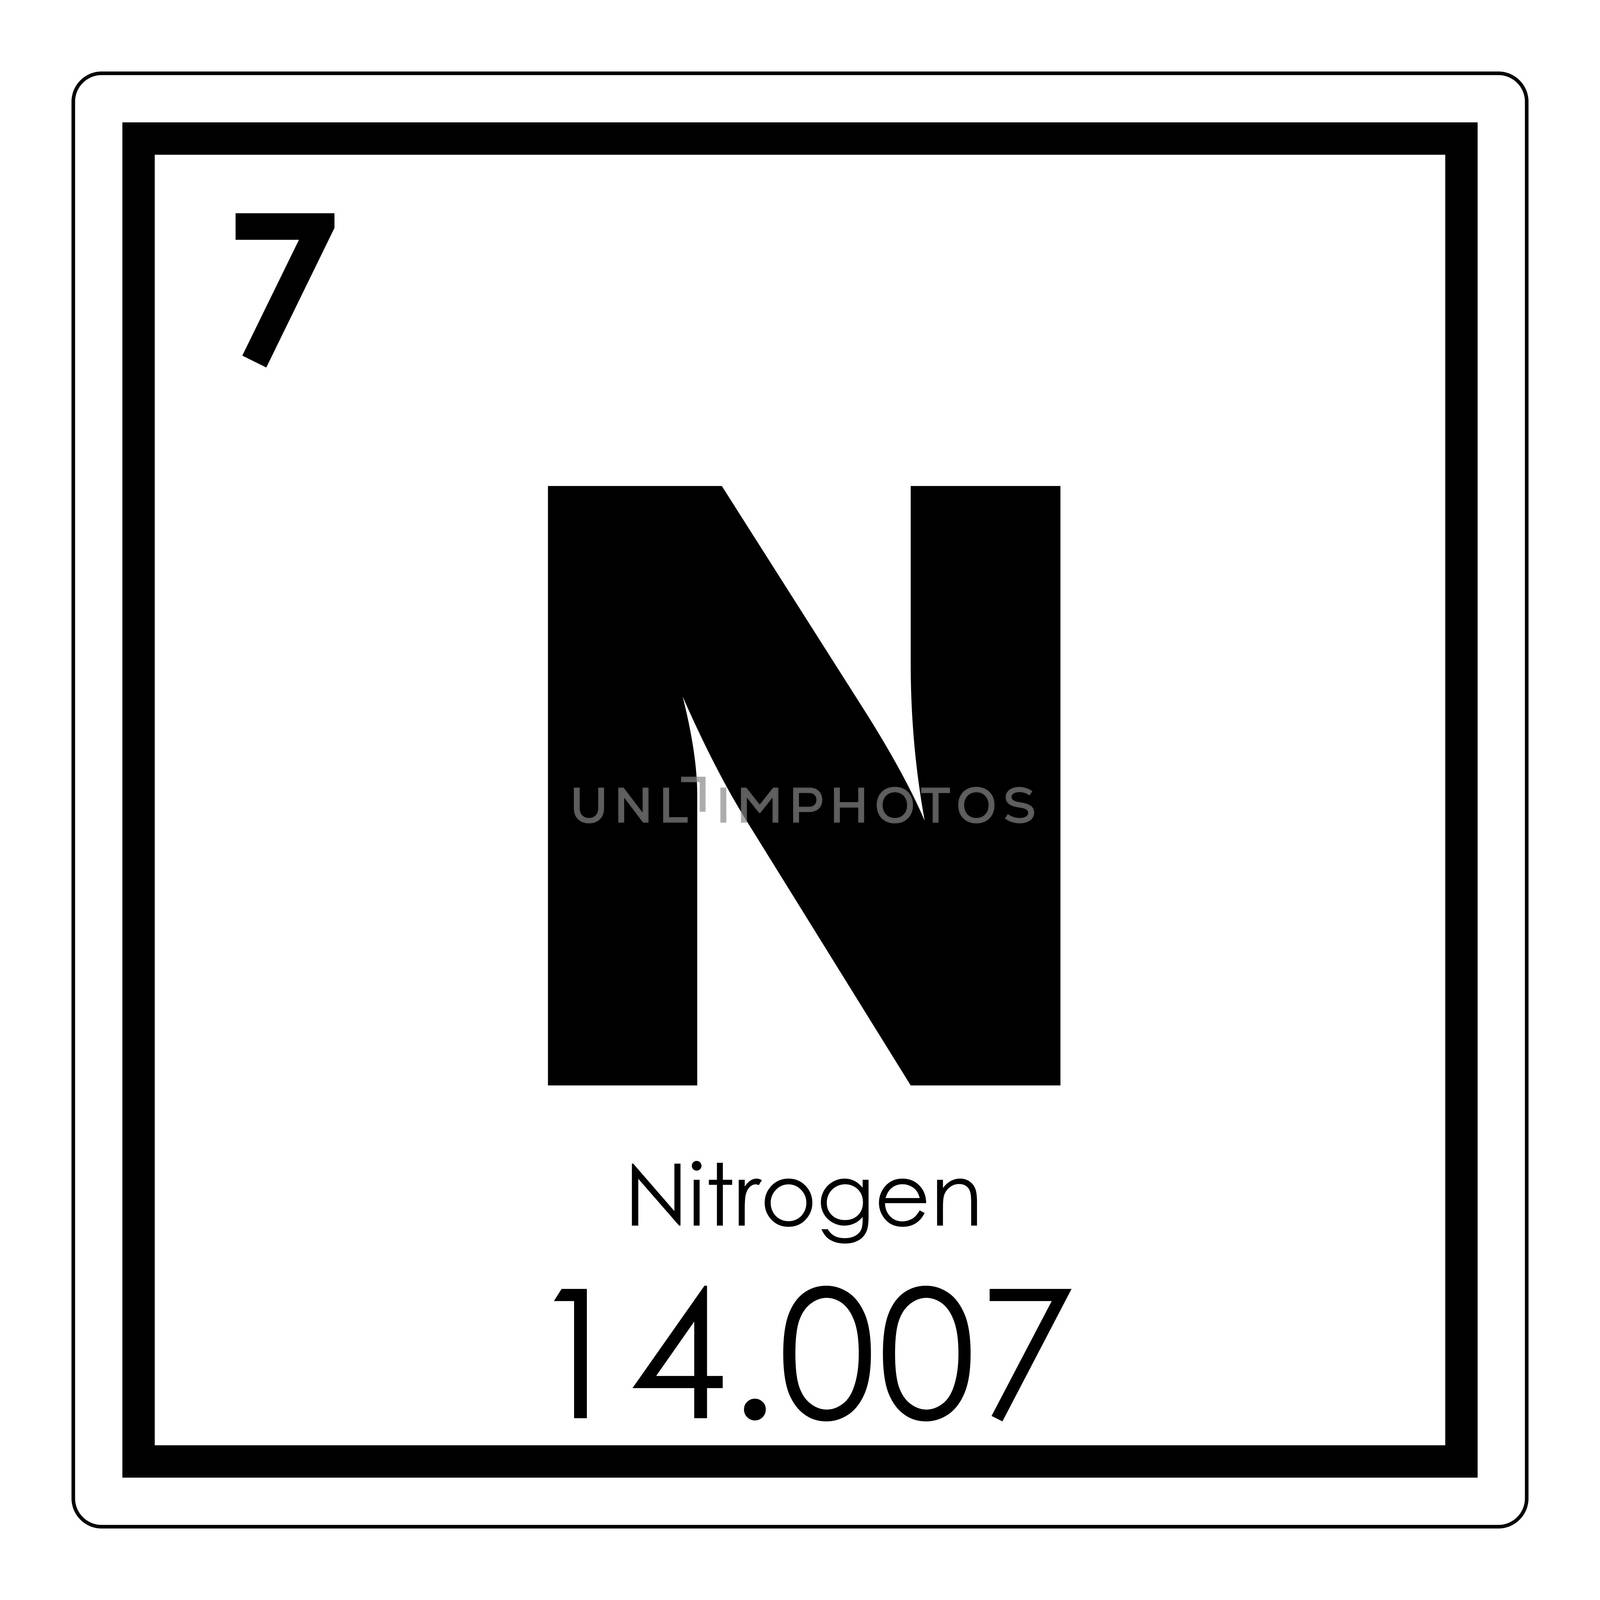 Nitrogen chemical element by tony4urban